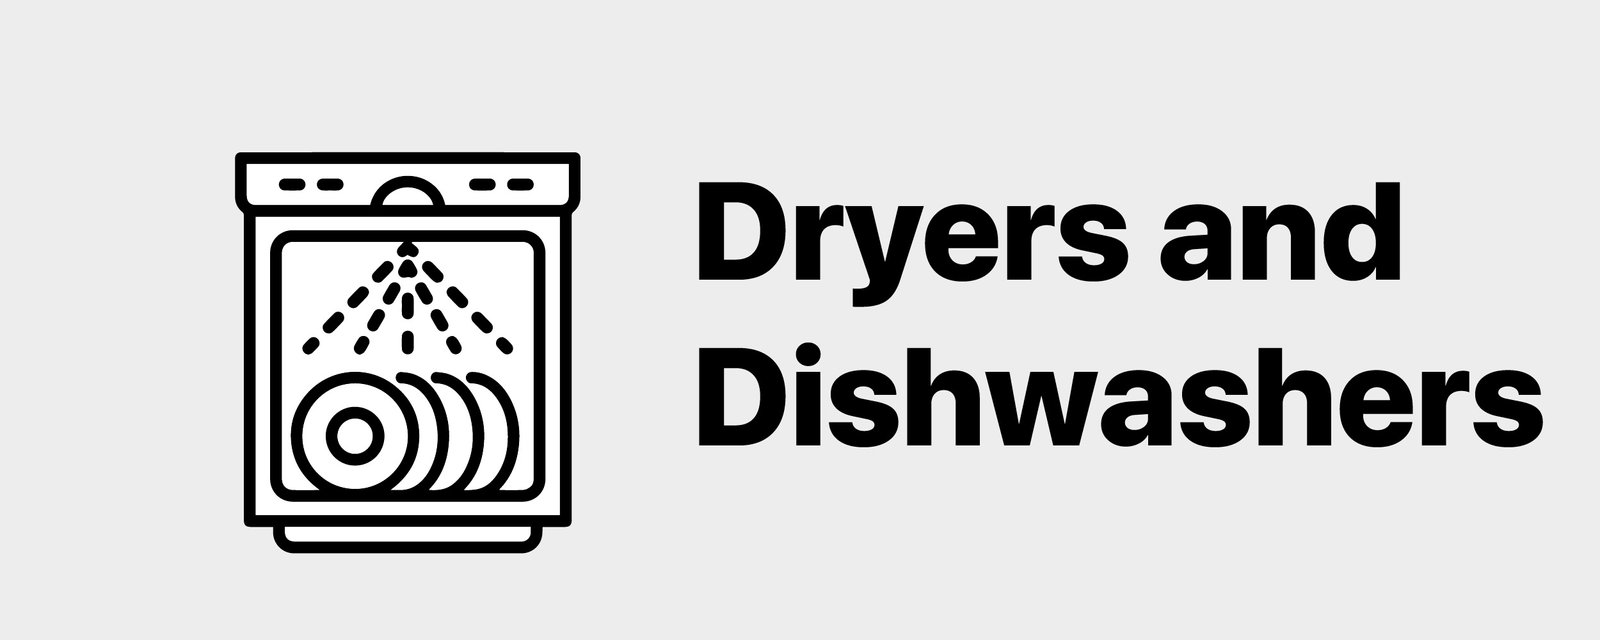 Dryers and dishwashers